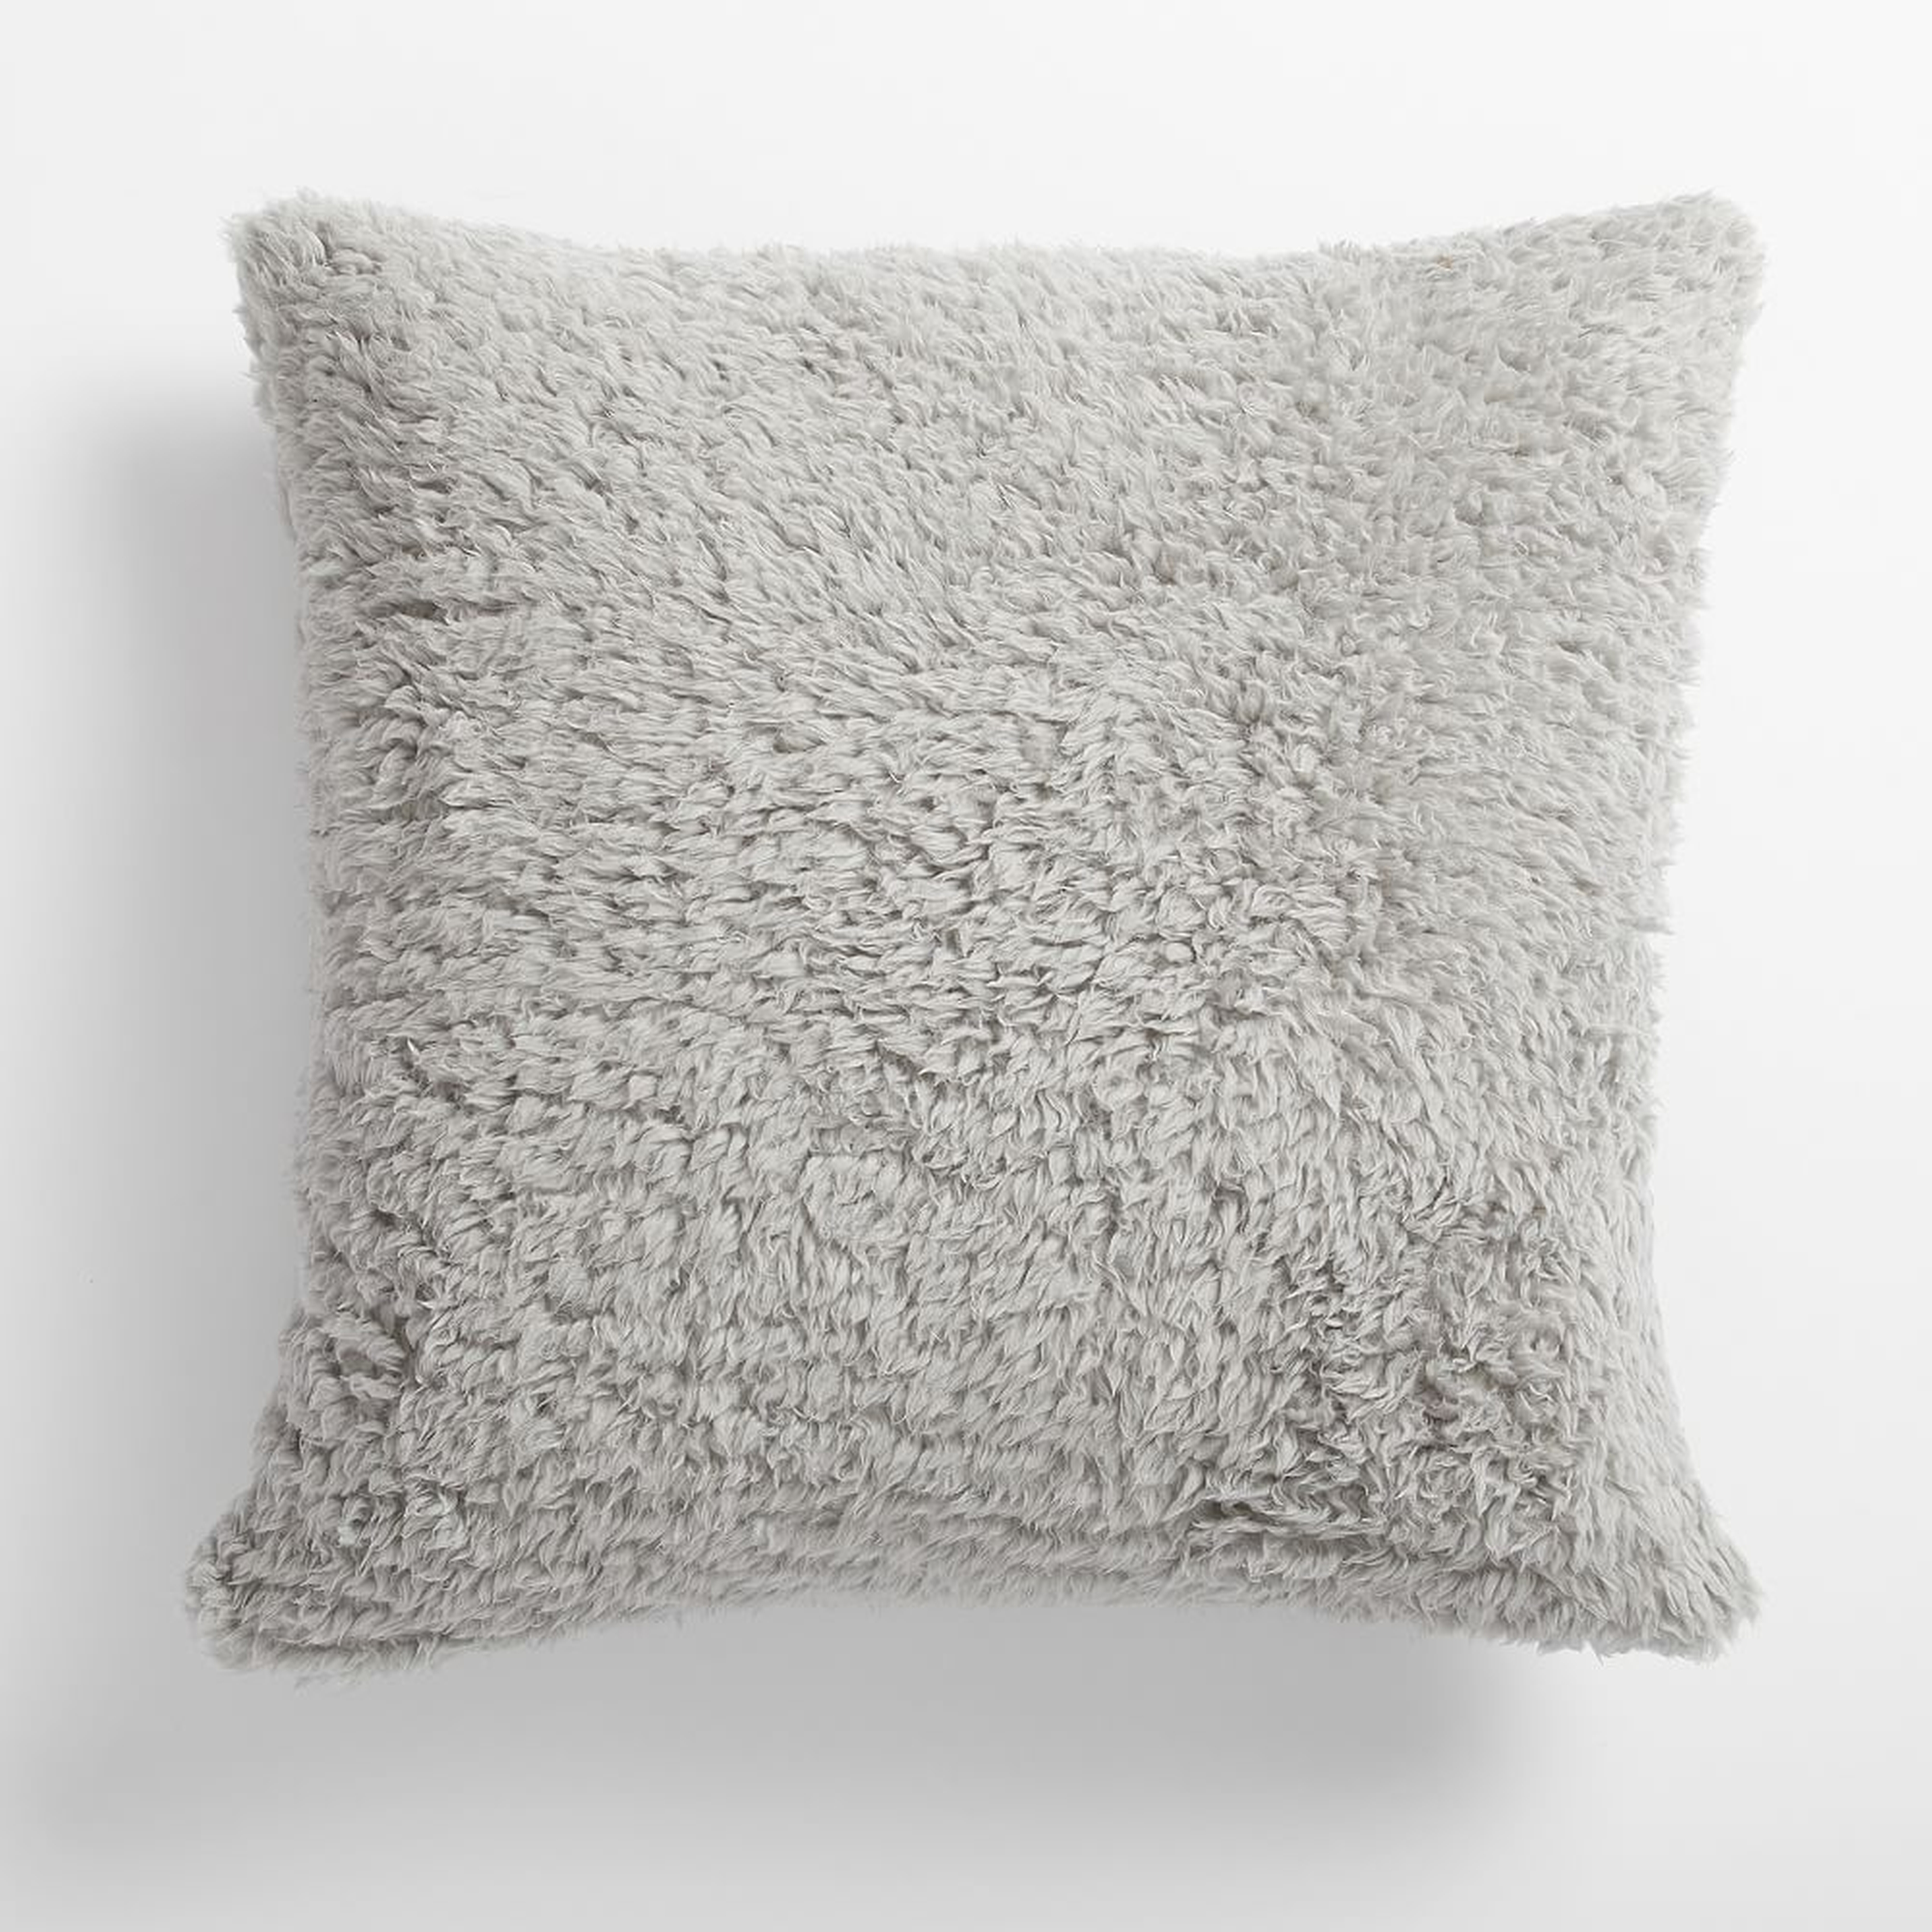 Cozy Sherpa Pillow Cover, 18x18, Light Grey - Pottery Barn Teen